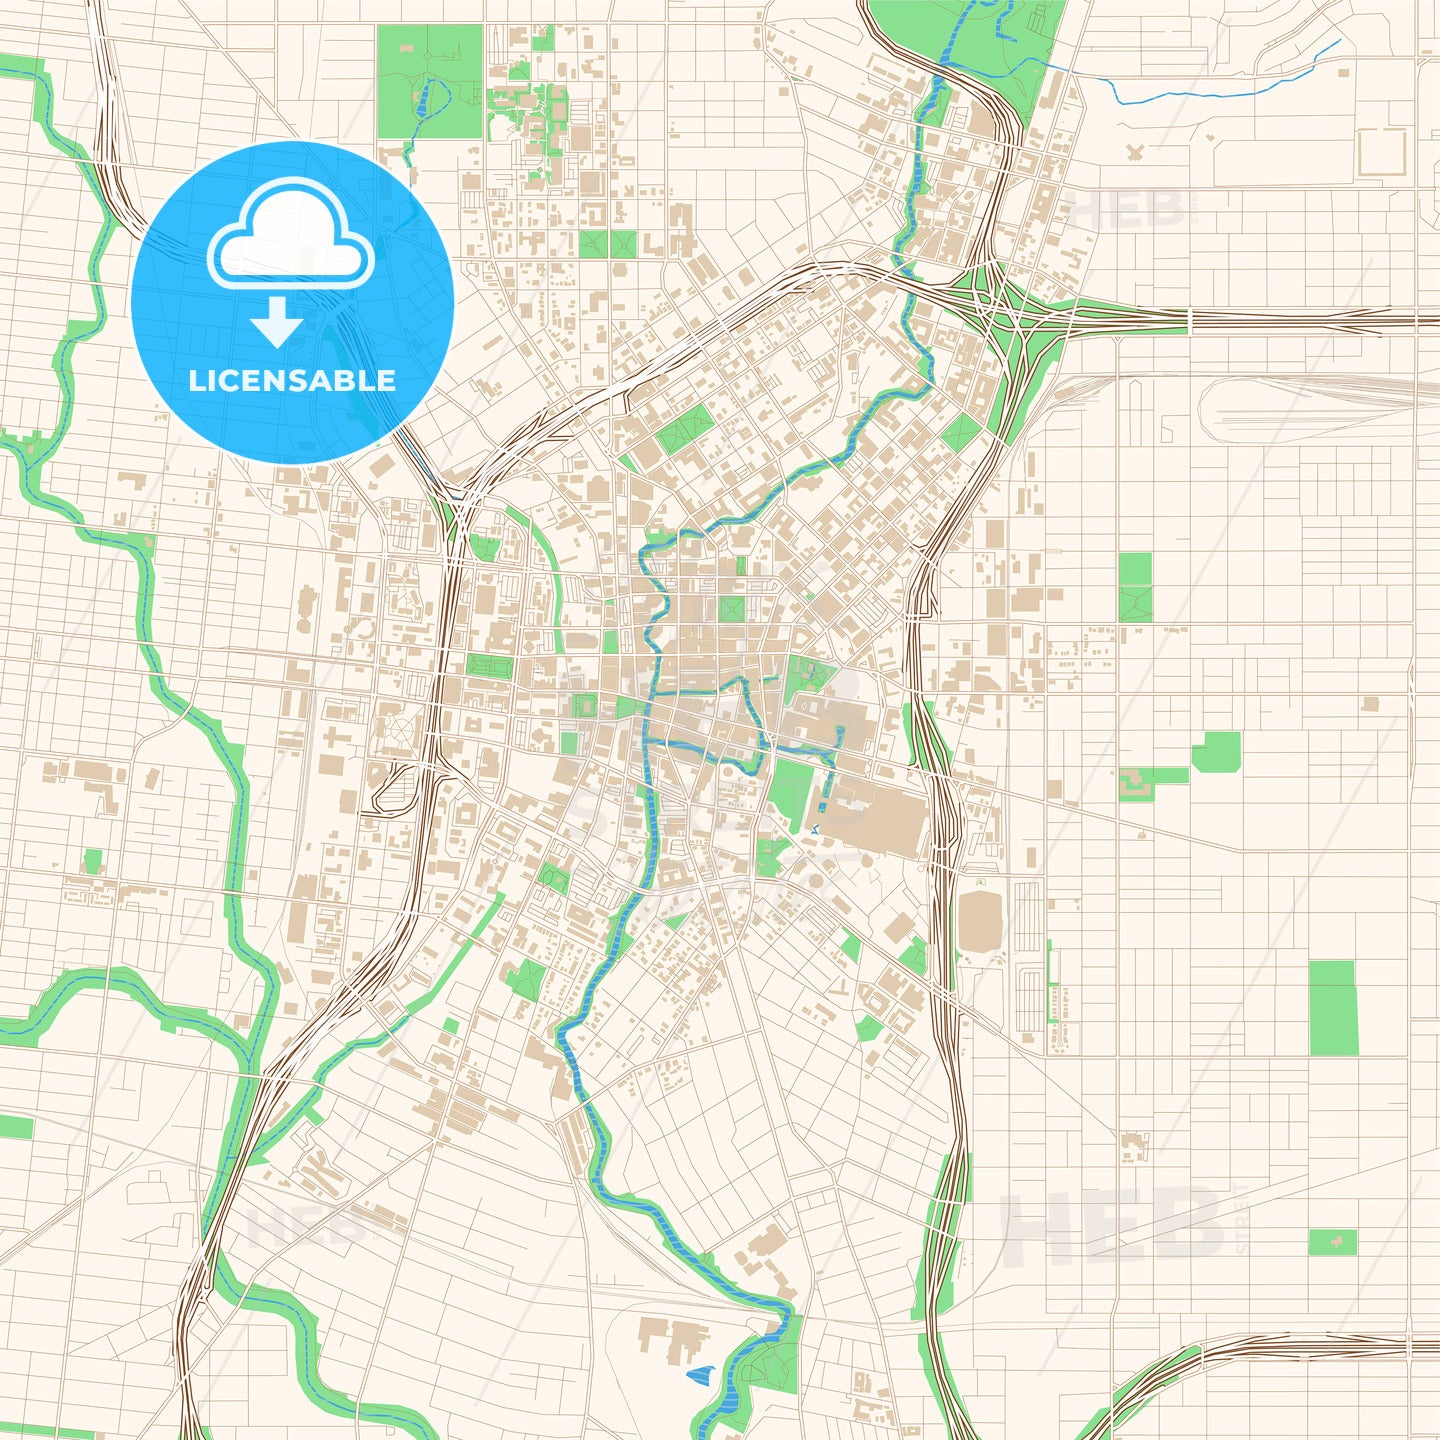 Street map of downtown San Antonio, Texas